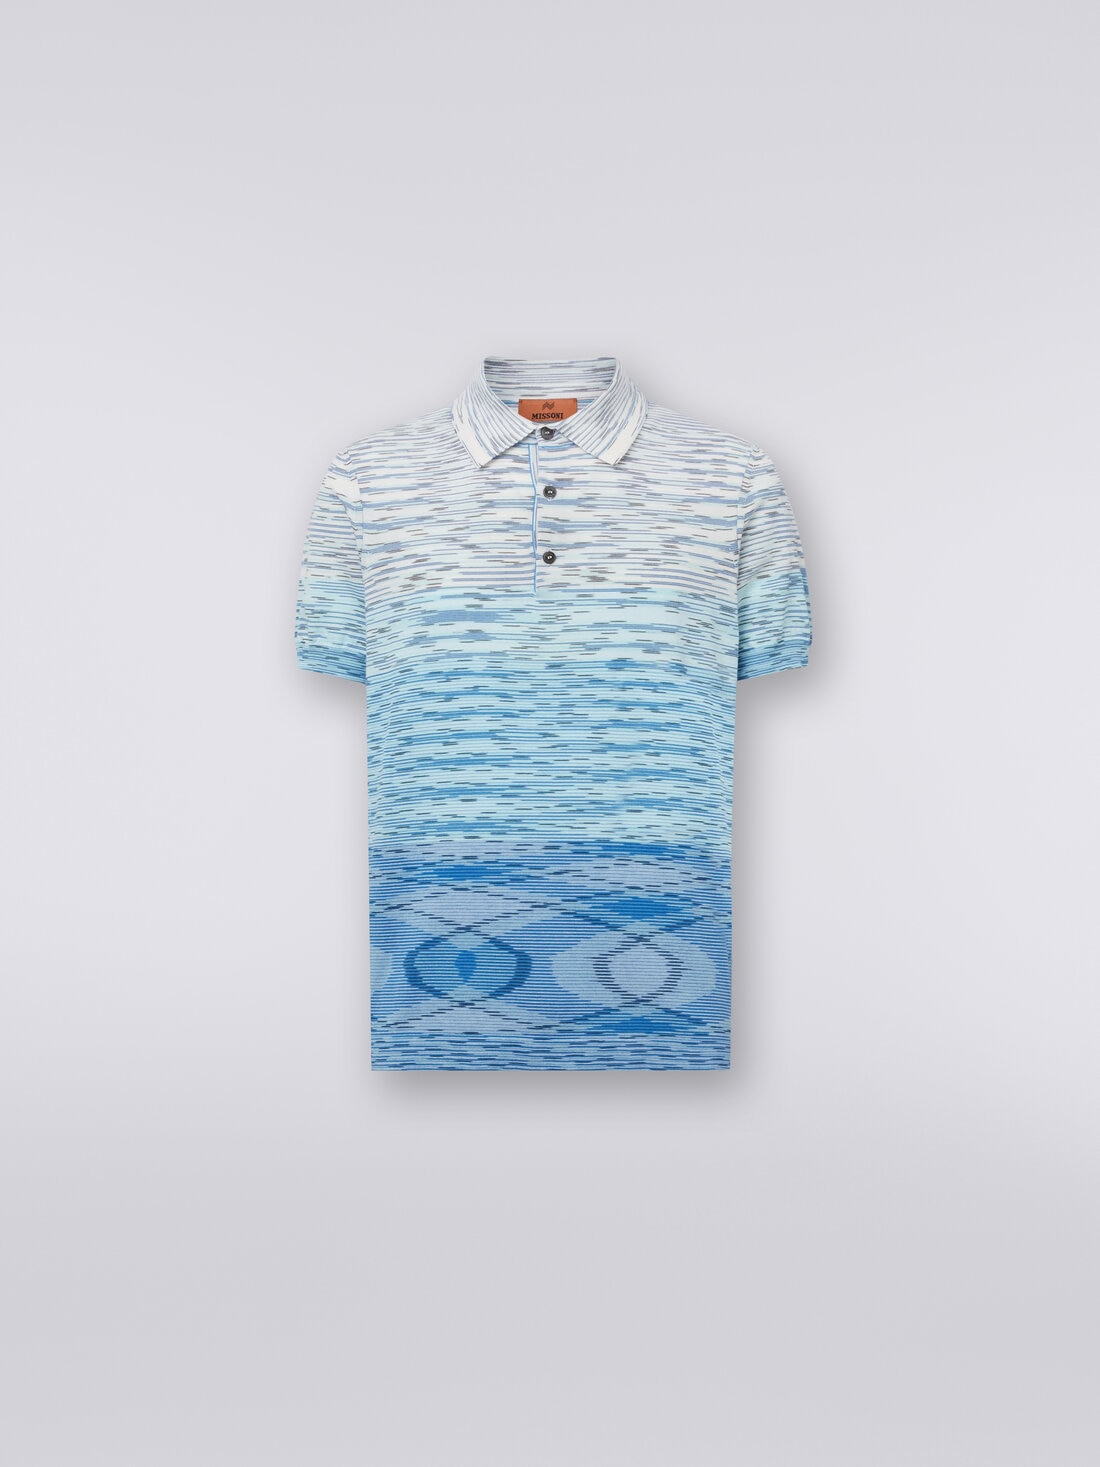 Kurzärmeliges Poloshirt aus Baumwolle in Flammgarnoptik mit Dégradé-Effekt, Mehrfarbig  - US24S20CBK012QS72F0 - 0